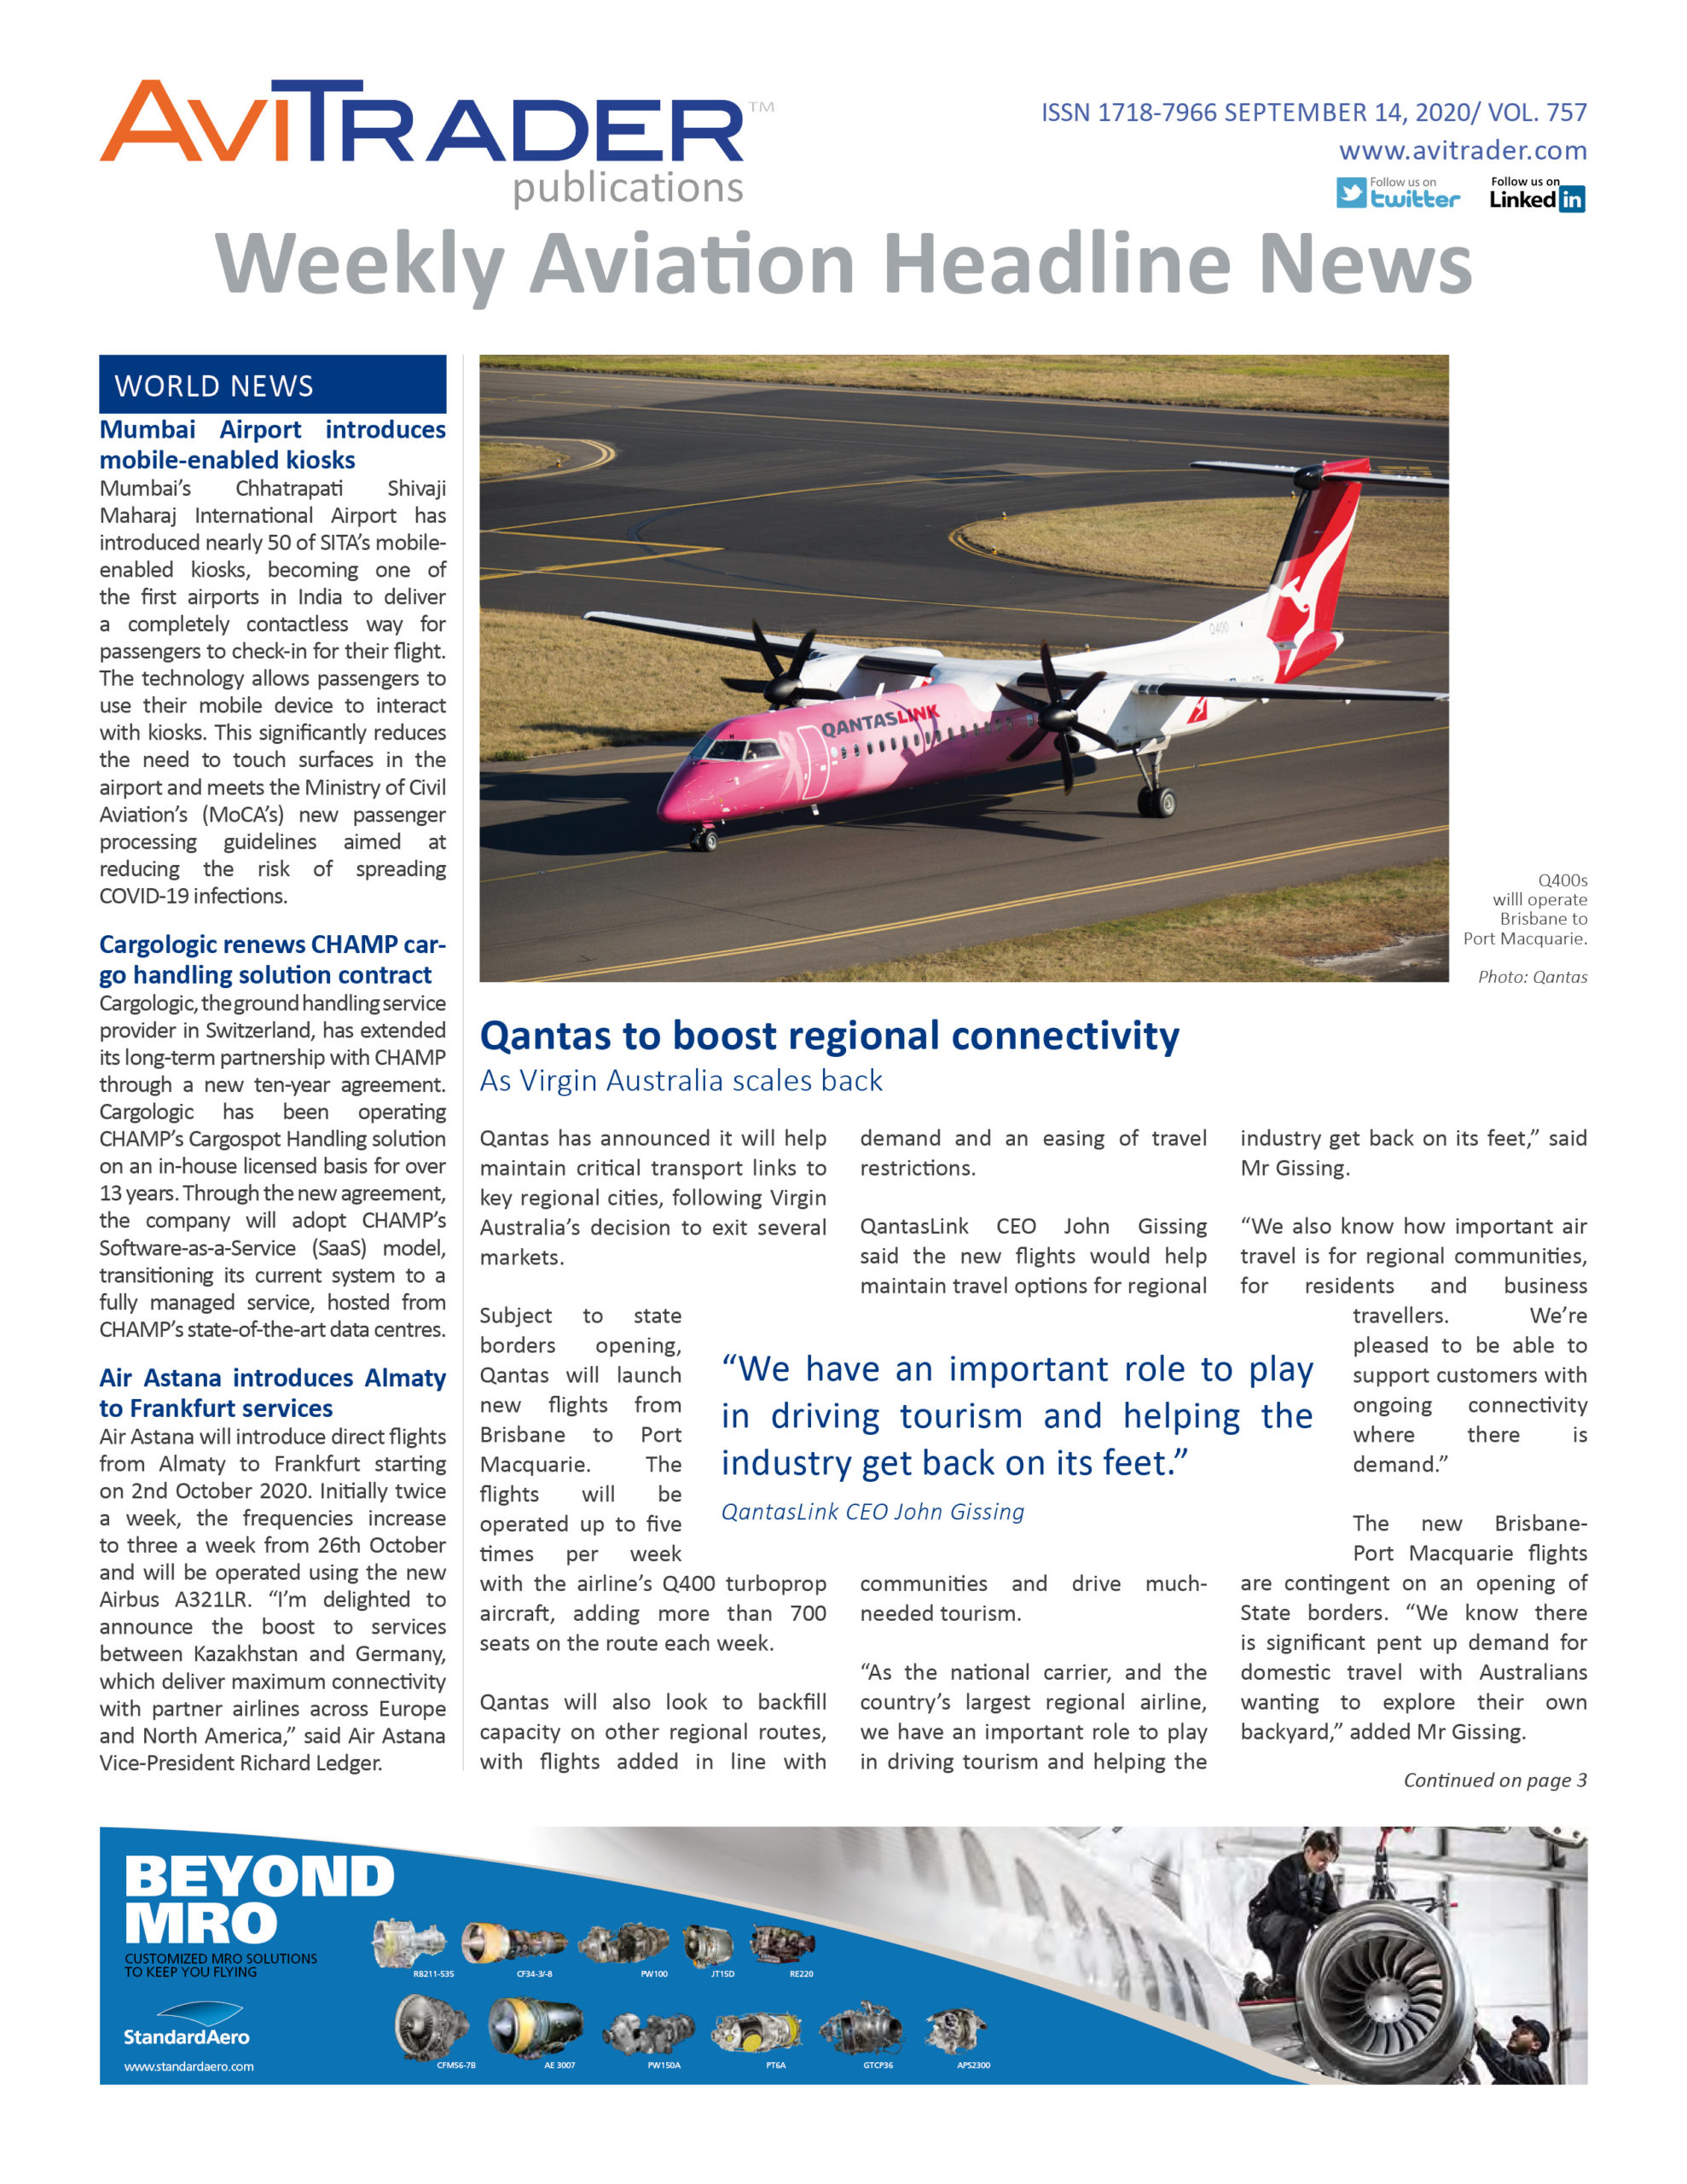 AviTrader_Weekly_Headline_News_Cover_2020-09-14